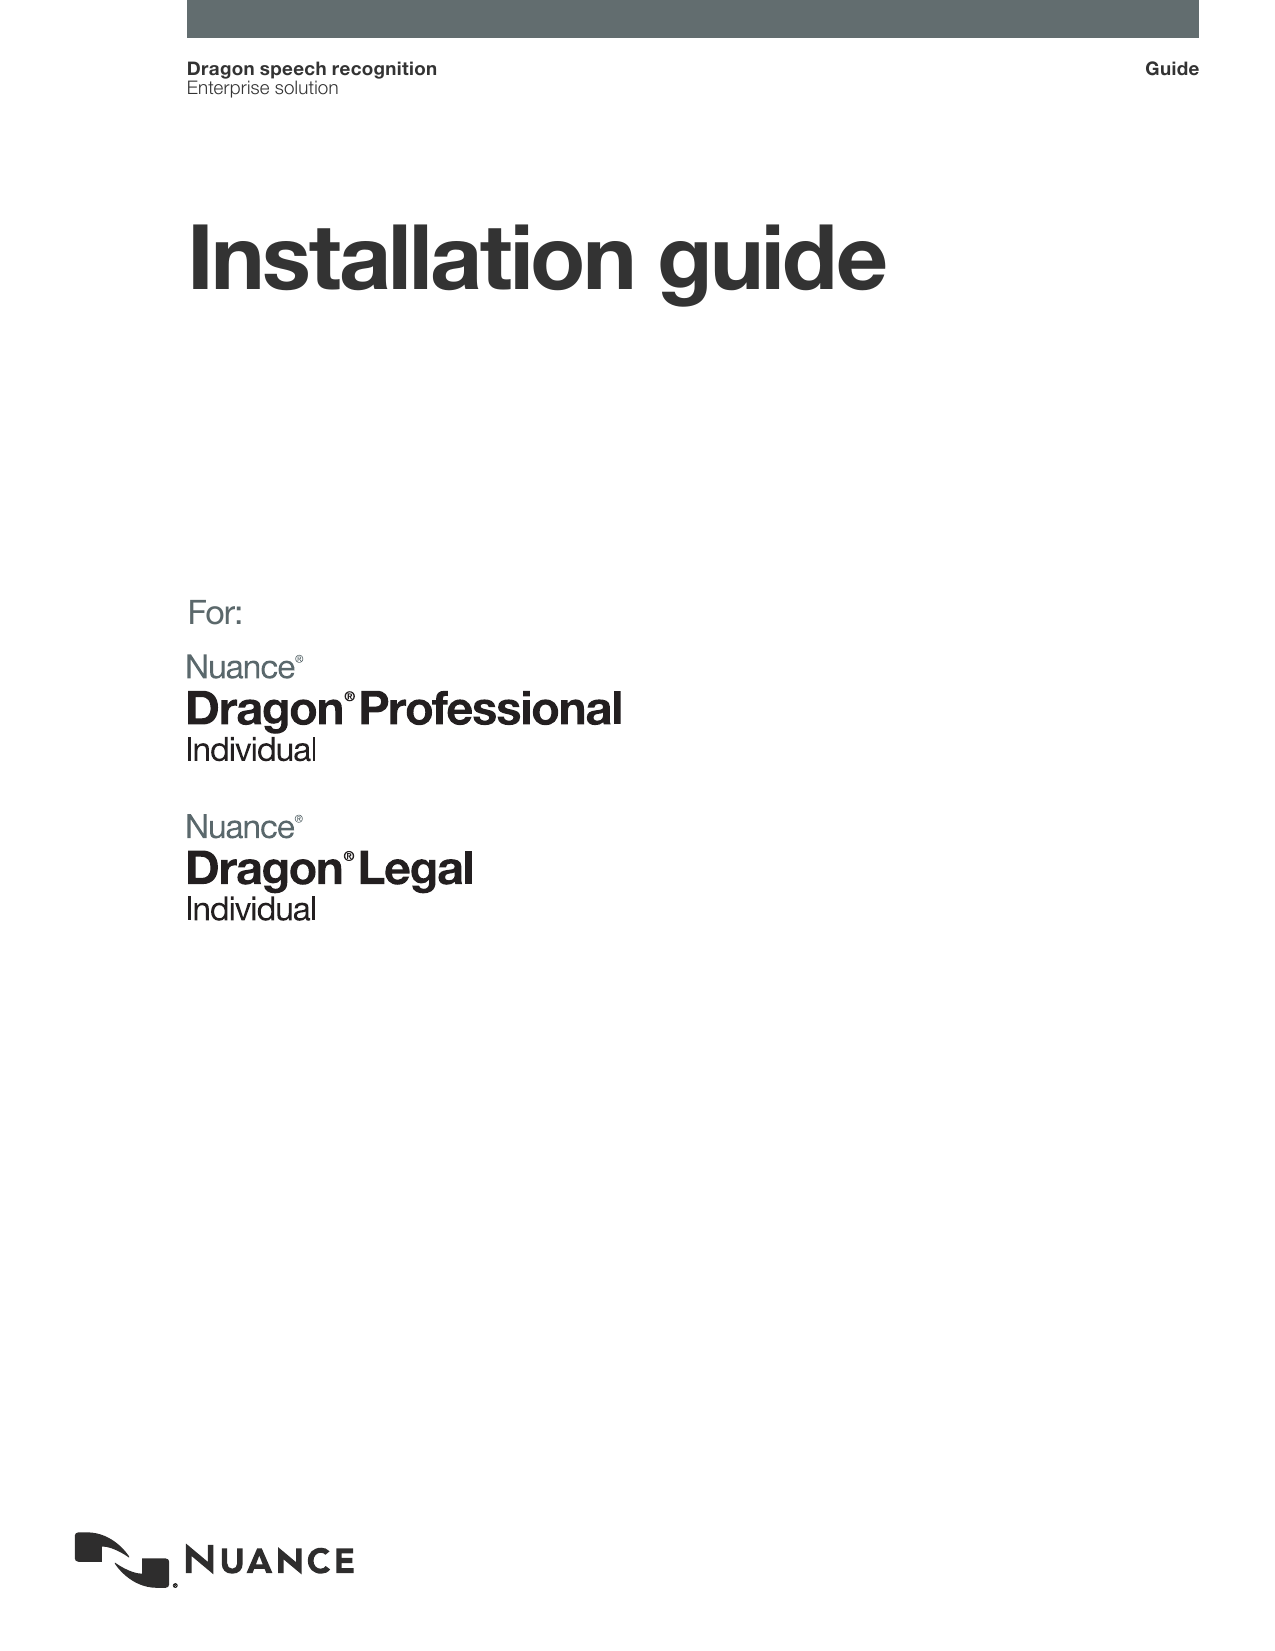 dragon professional individual upgrade